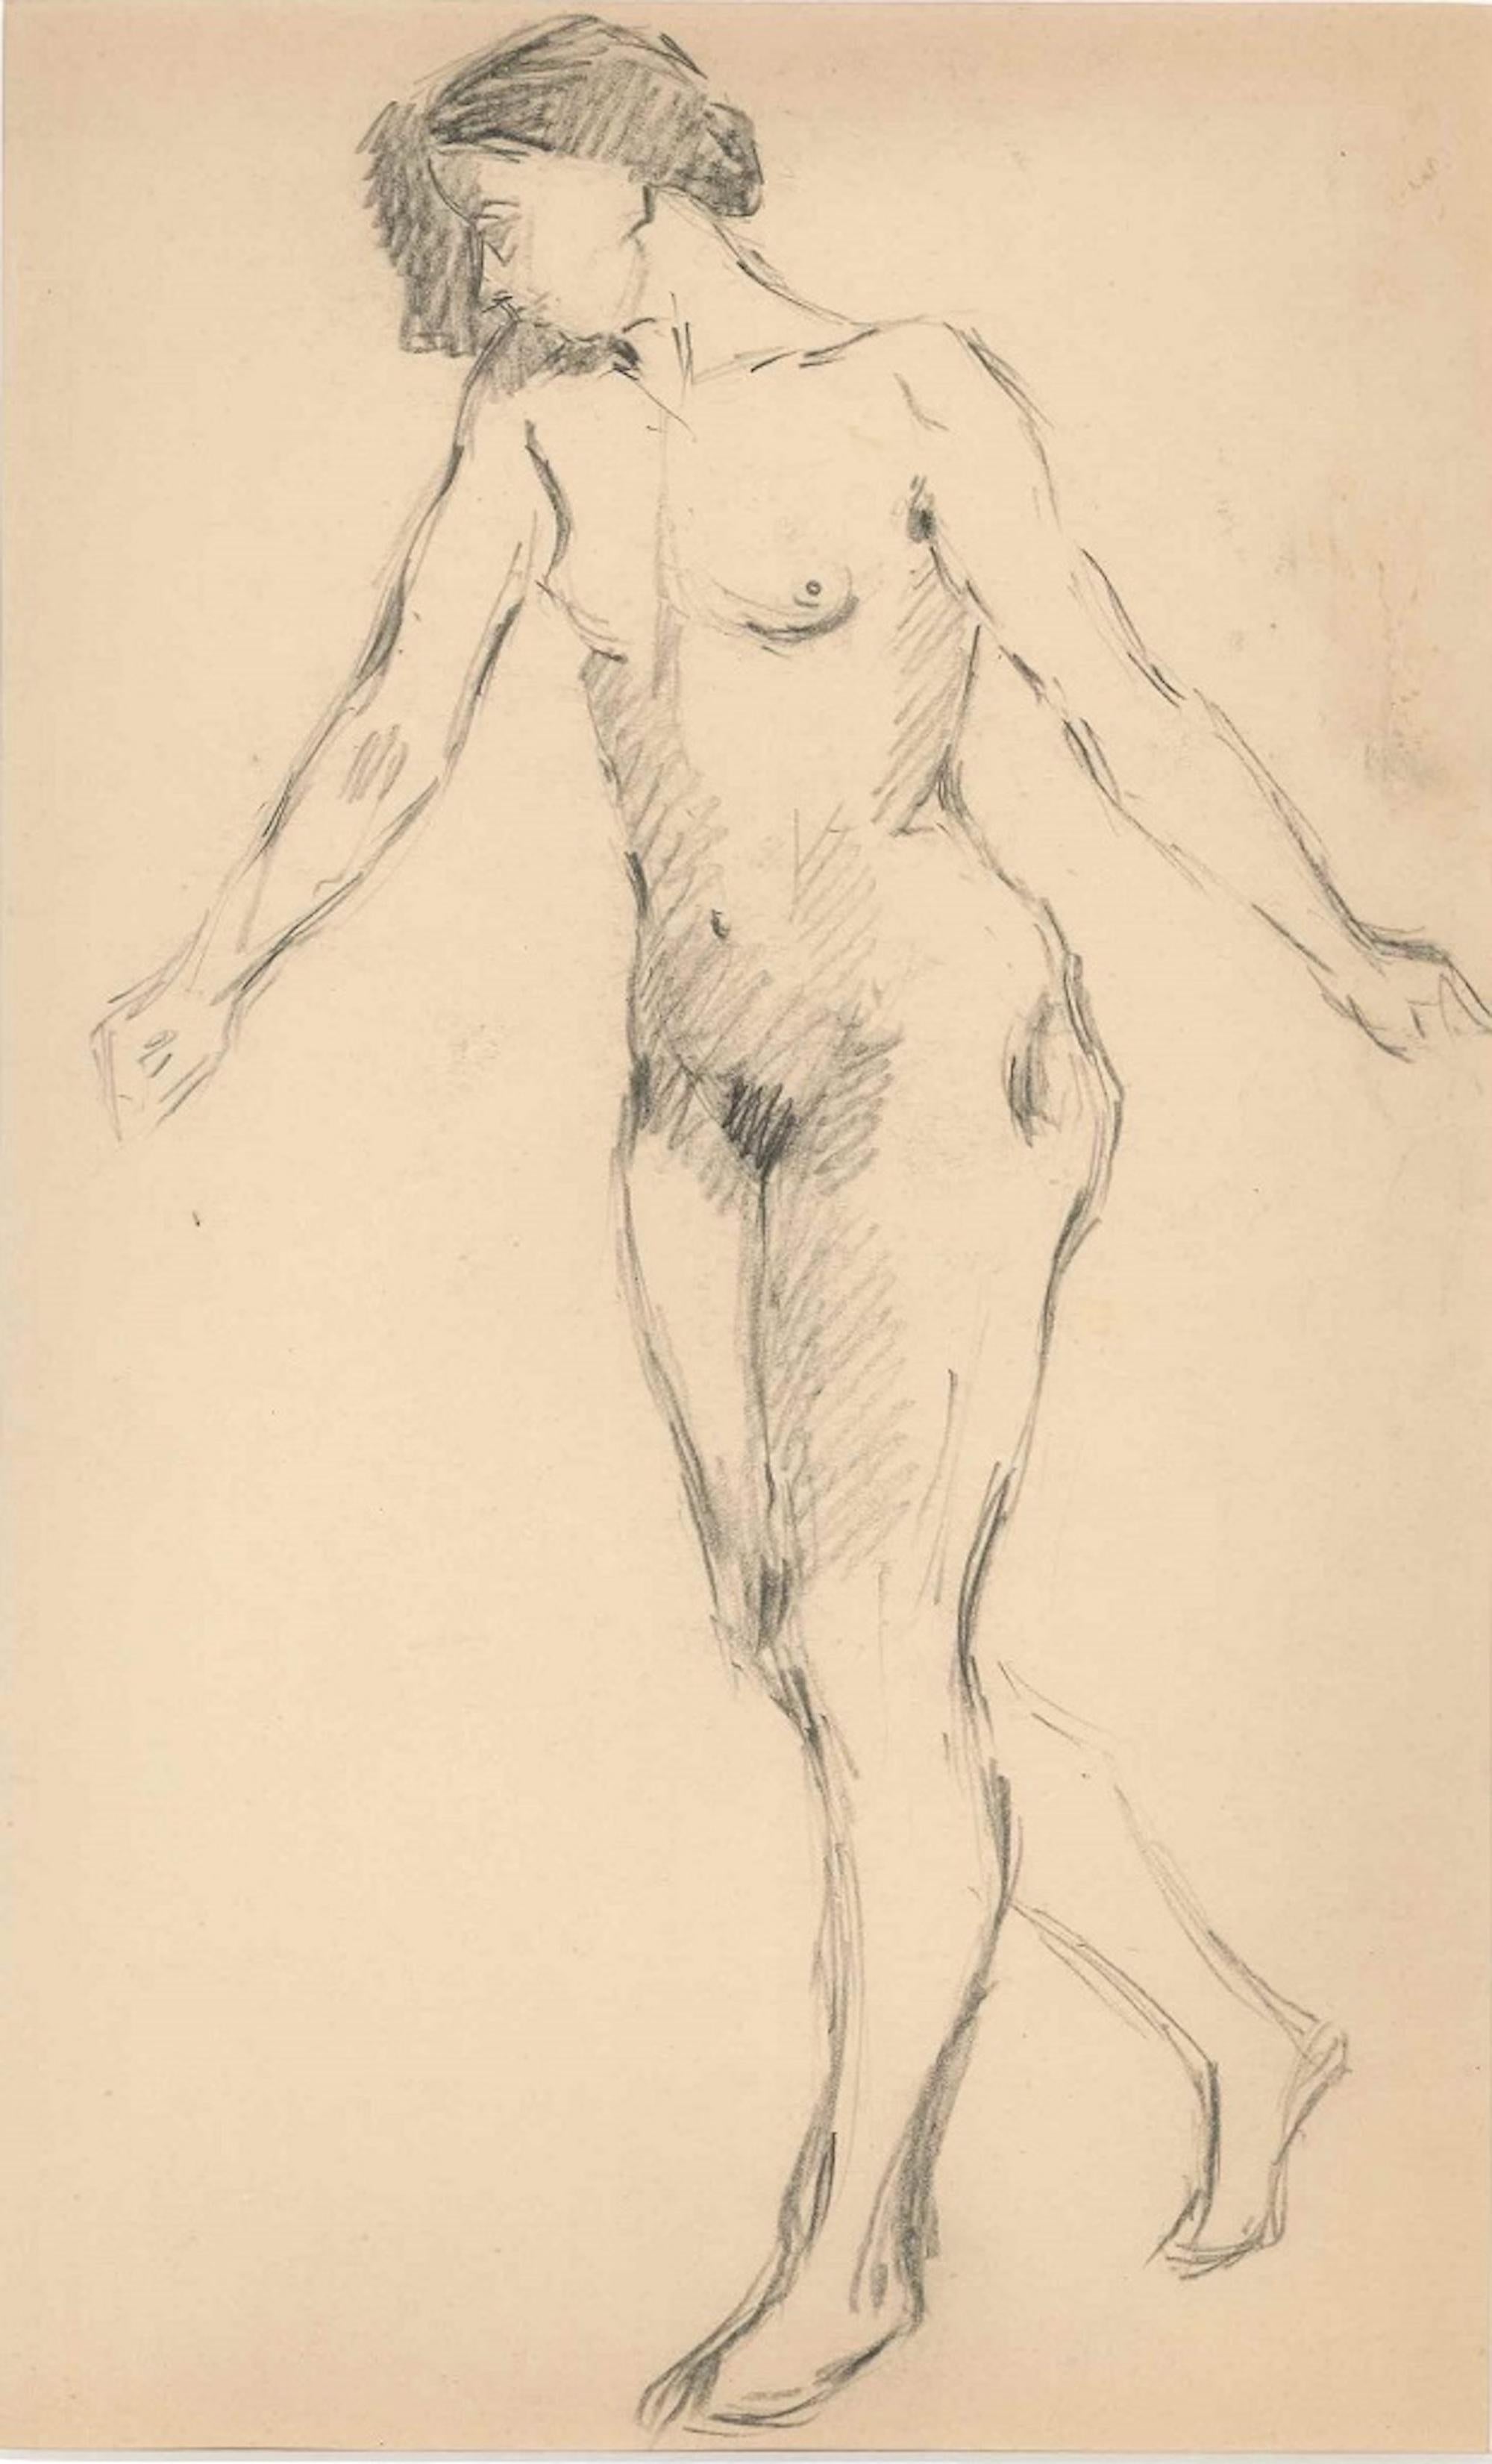 Unknown Figurative Art - Female Nude Figure in Profile  - Original Drawing - Early 20th Century